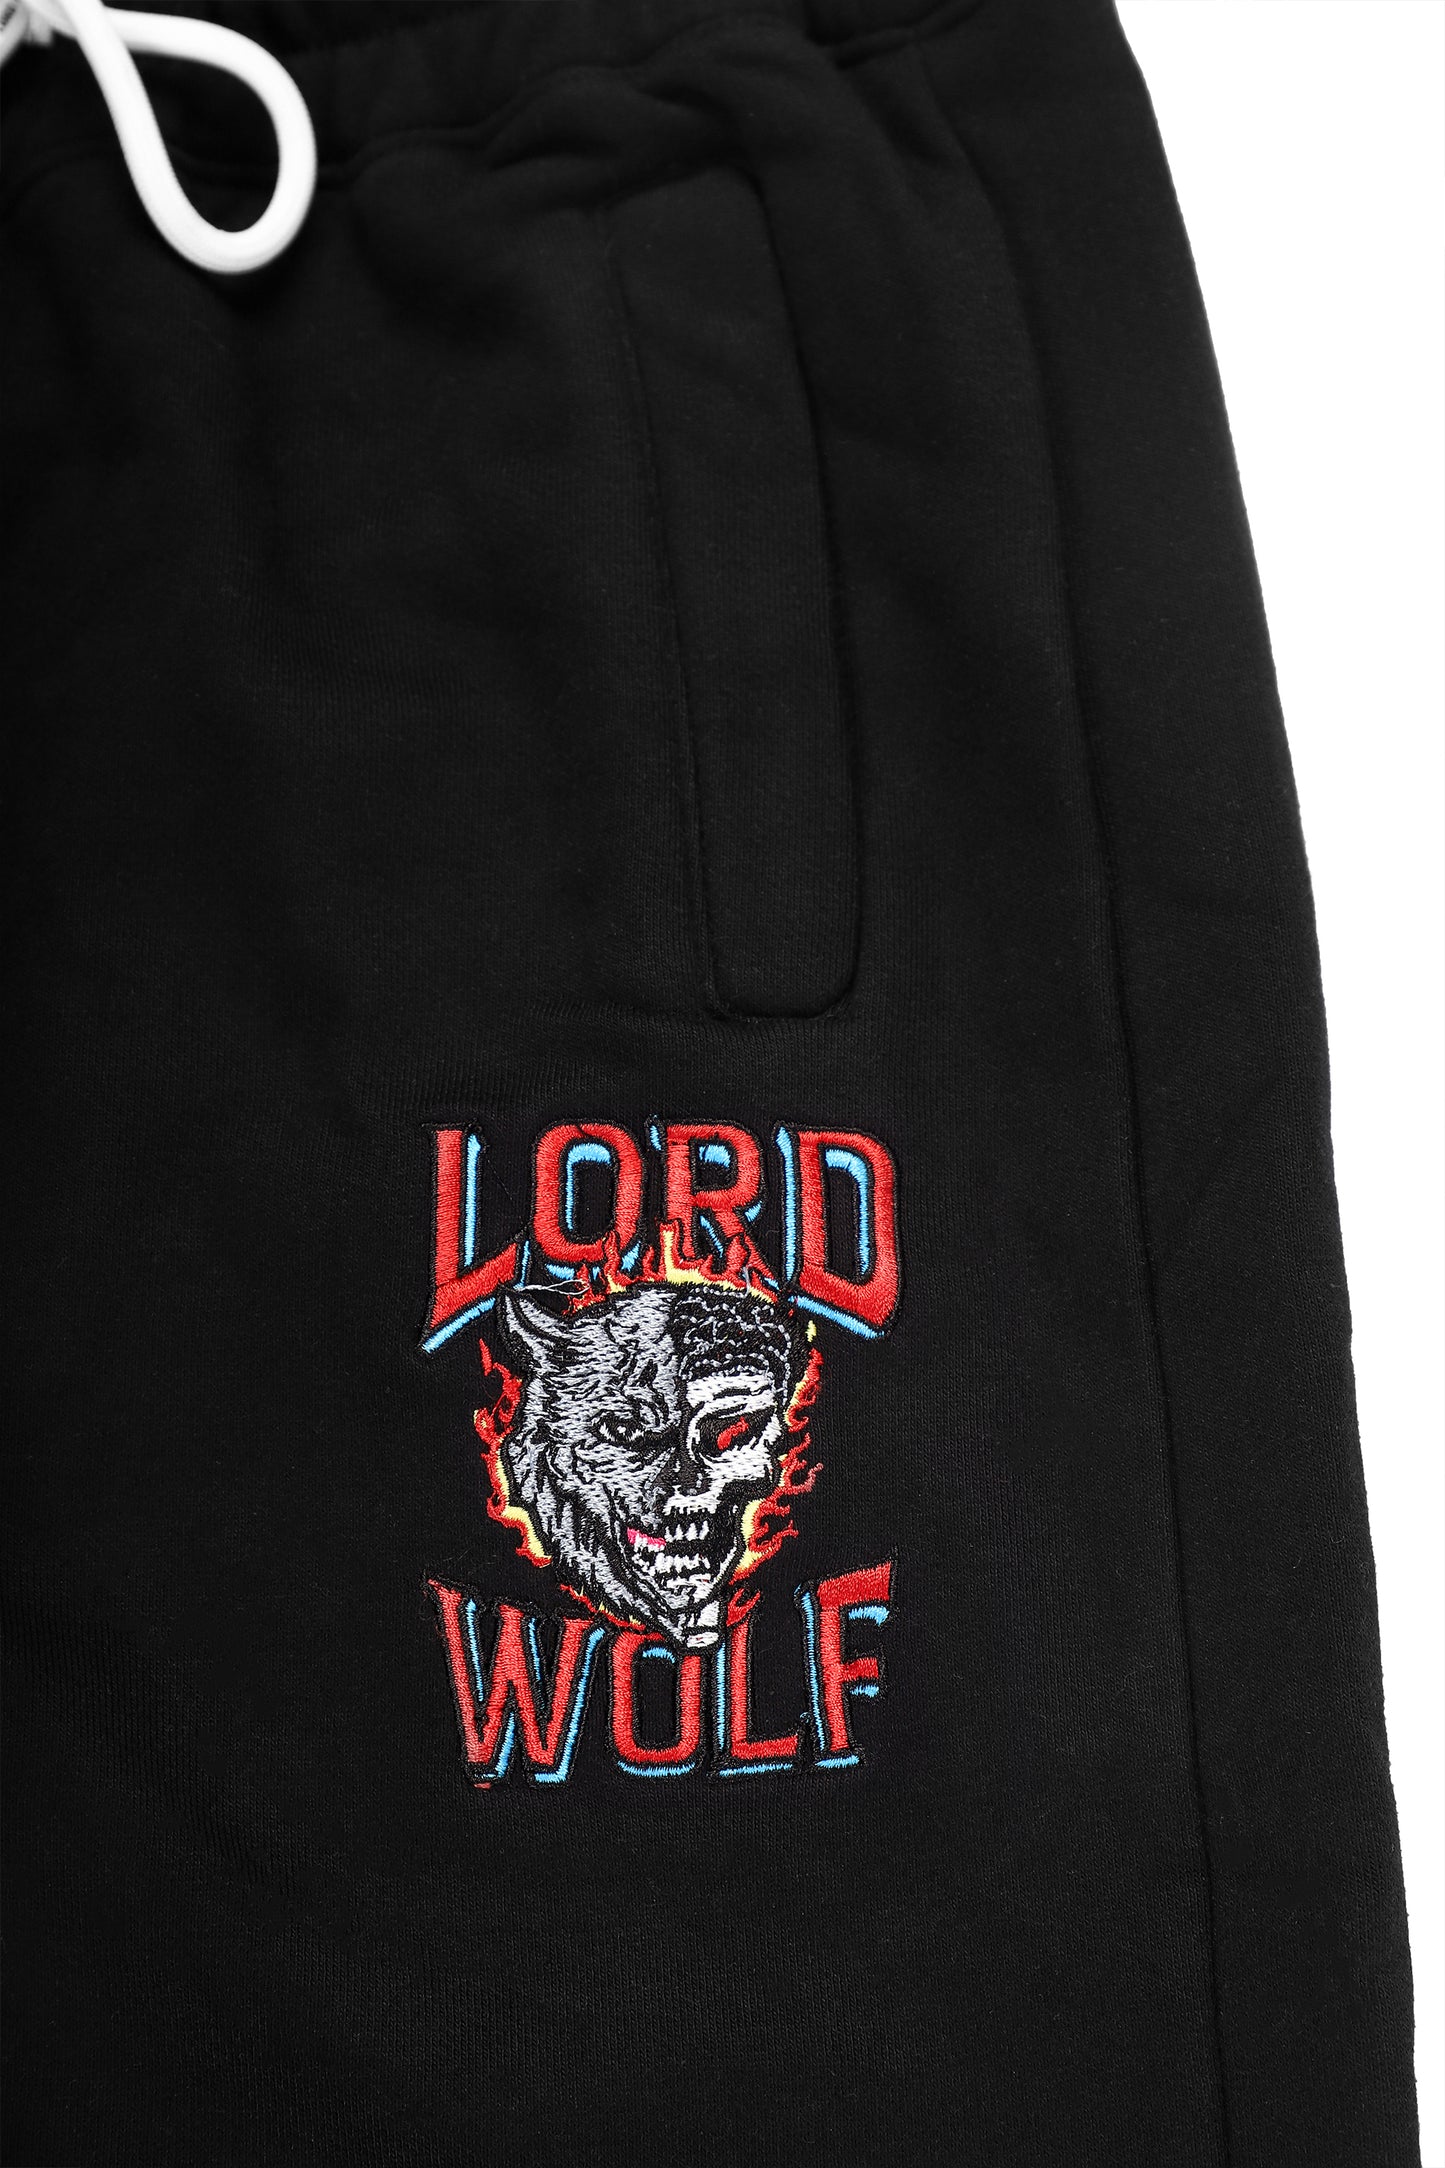 Lord Wolf "Wolf" Sweatpant